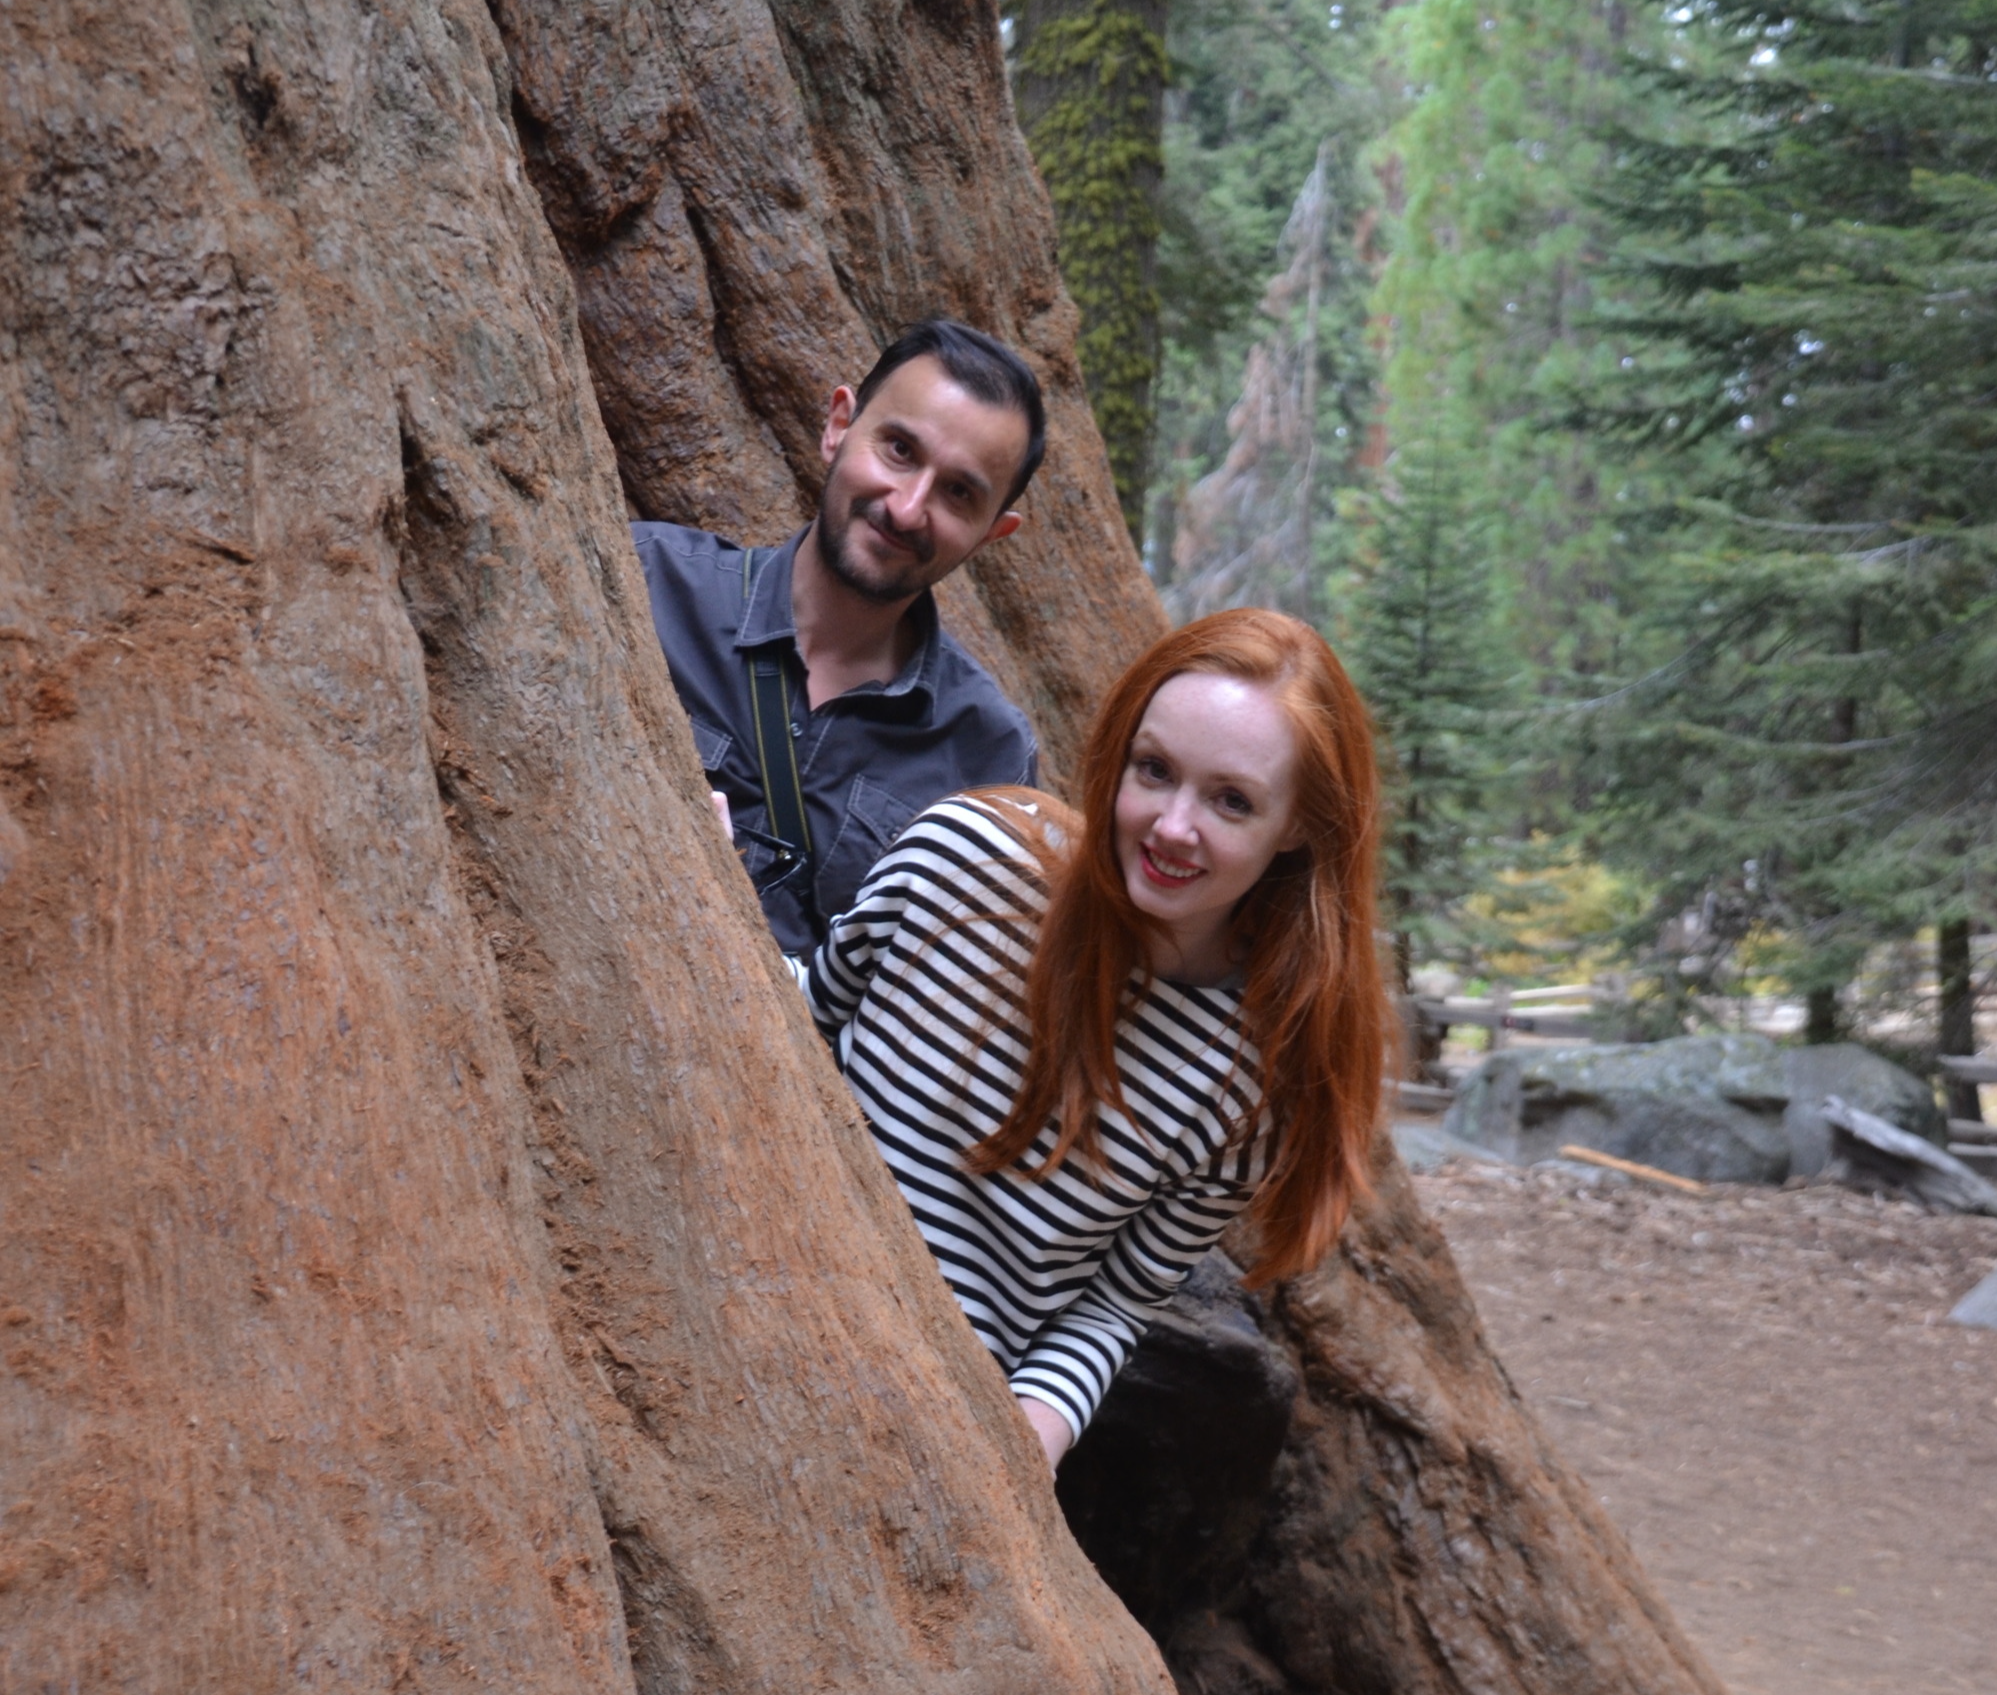 Visiting Sequoia National Park, California